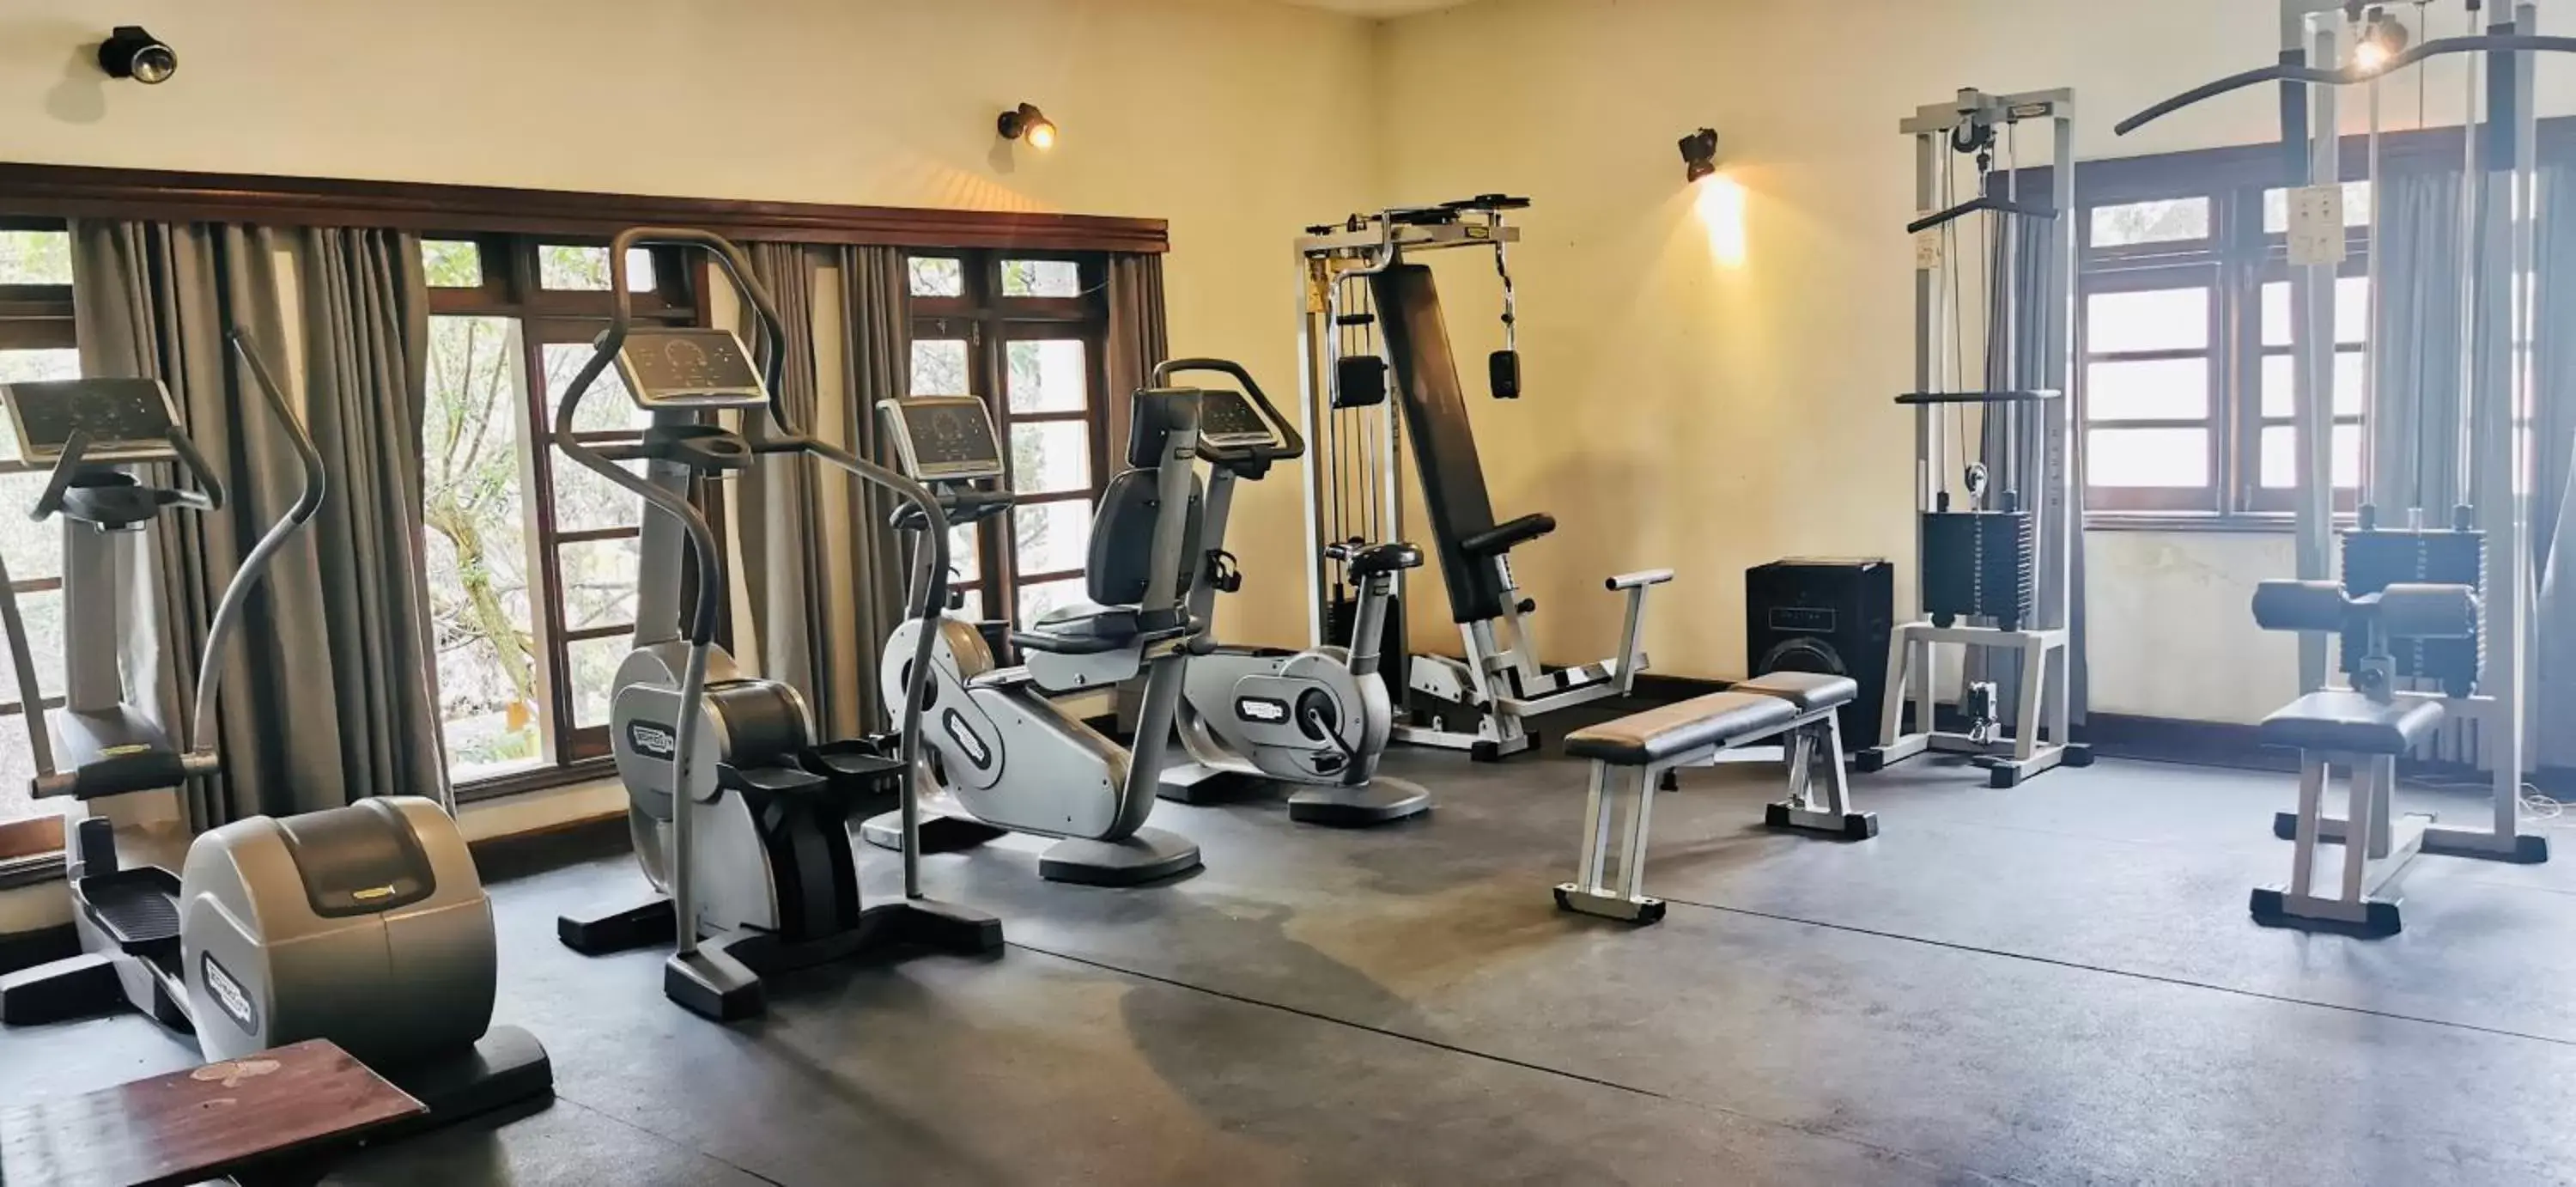 Fitness centre/facilities, Fitness Center/Facilities in Jinja Nile Resort